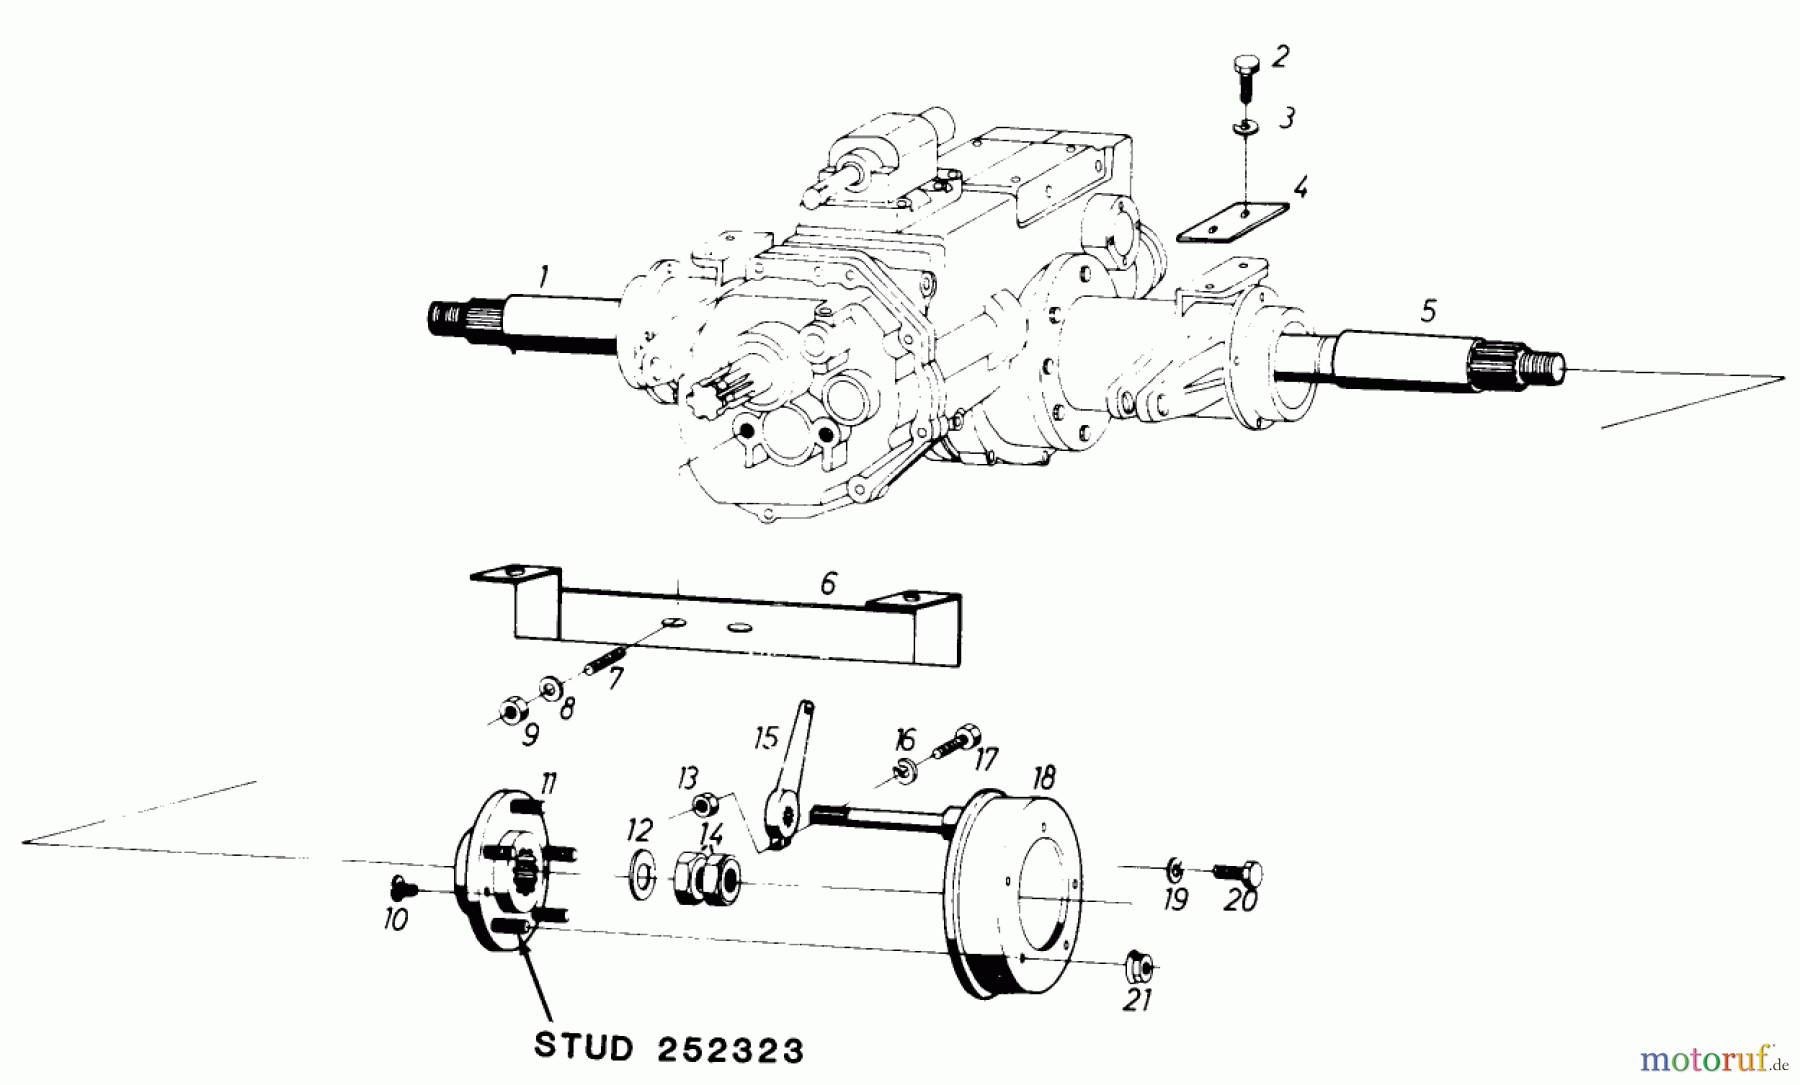  Toro Neu Mowers, Lawn & Garden Tractor Seite 1 61-20RG01 (D-250) - Toro D-250 10-Speed Tractor, 1977 BRAKES